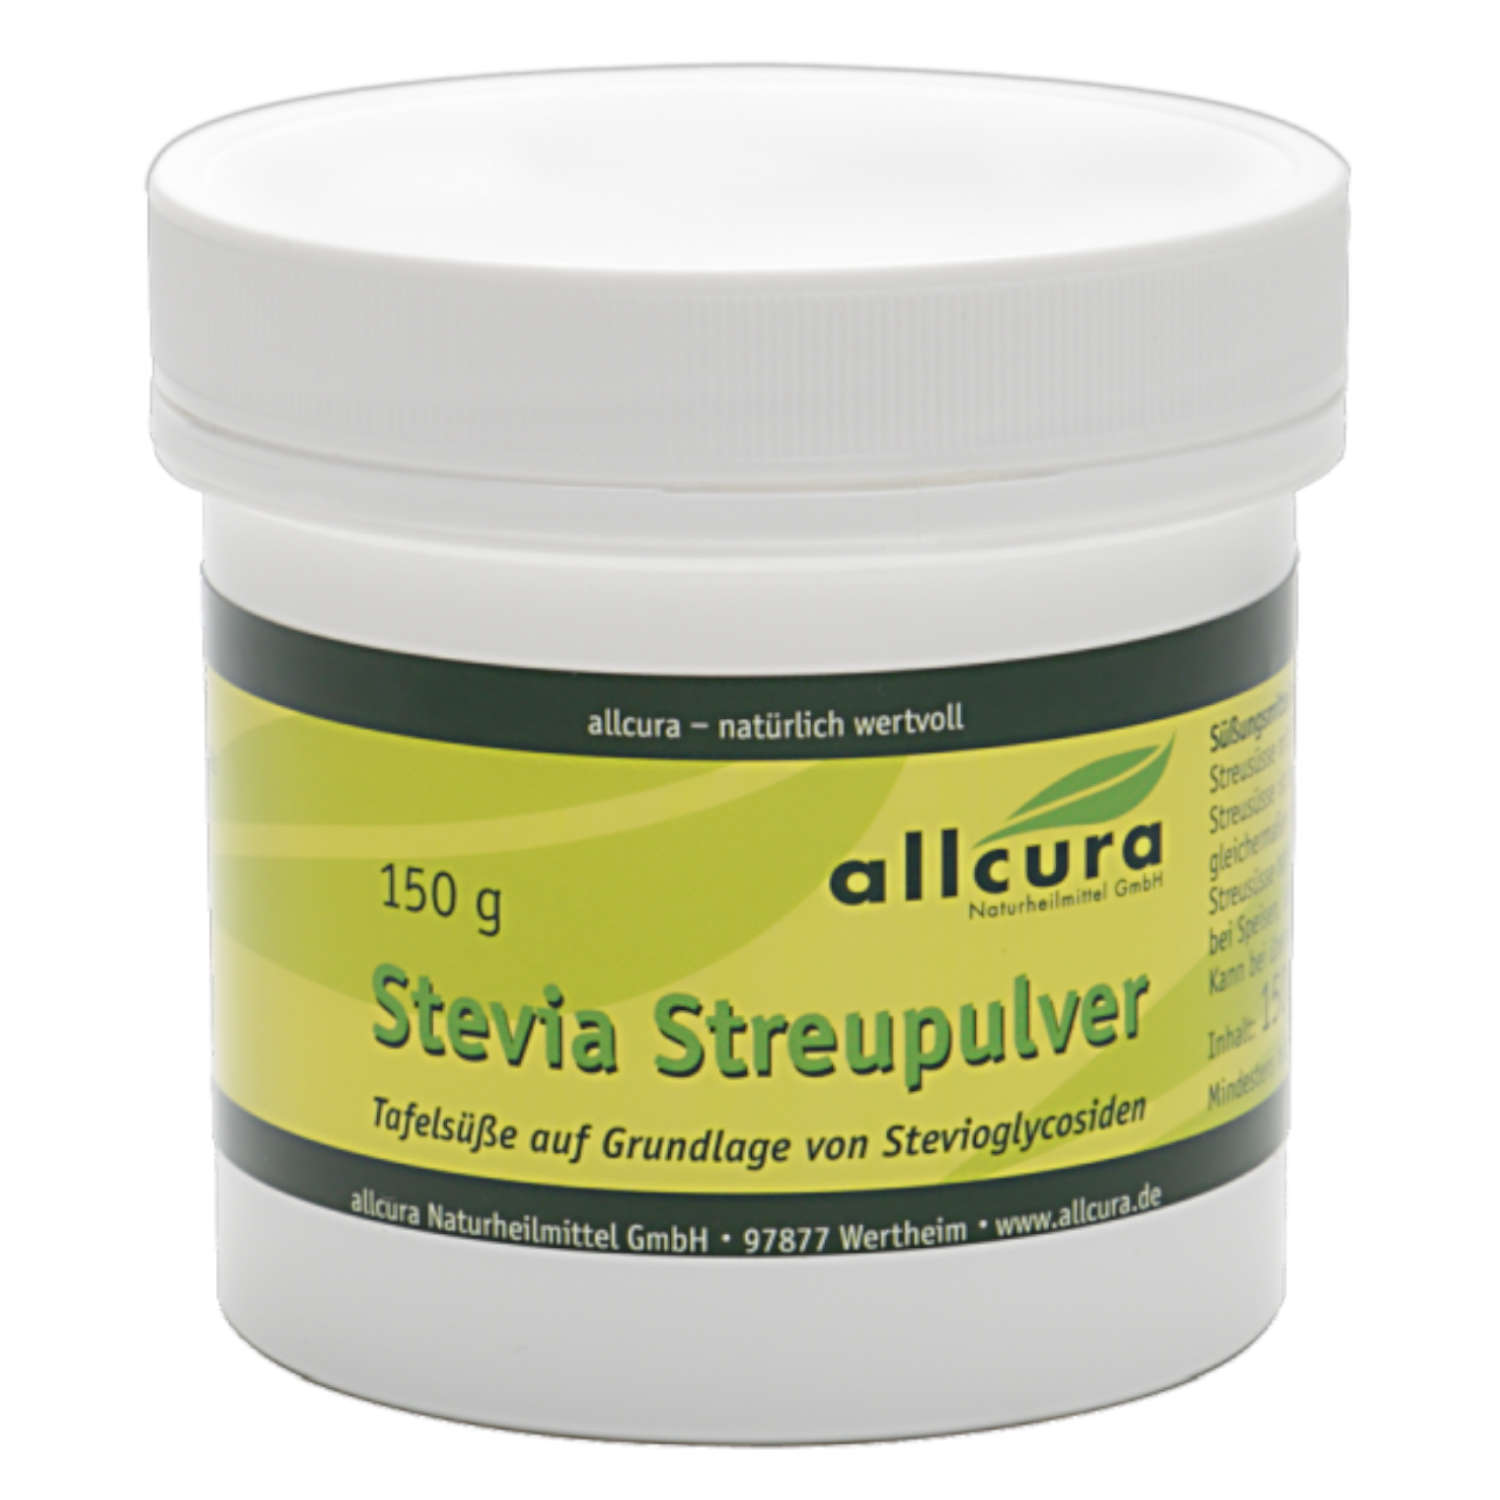 Stevia Streupulver von Allcura - 150g